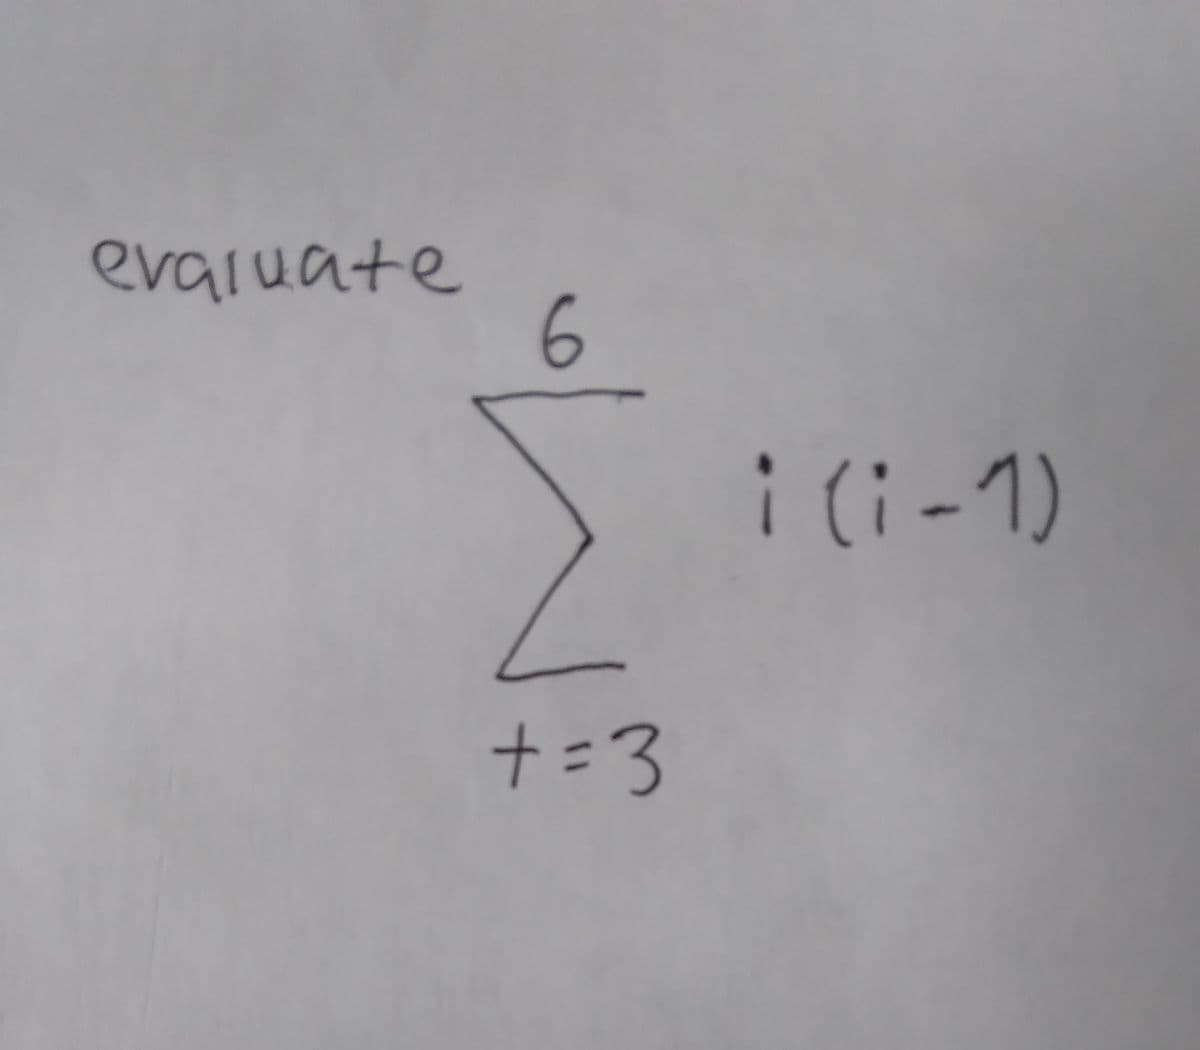 evaruate
6
i (i-1)
+=3
